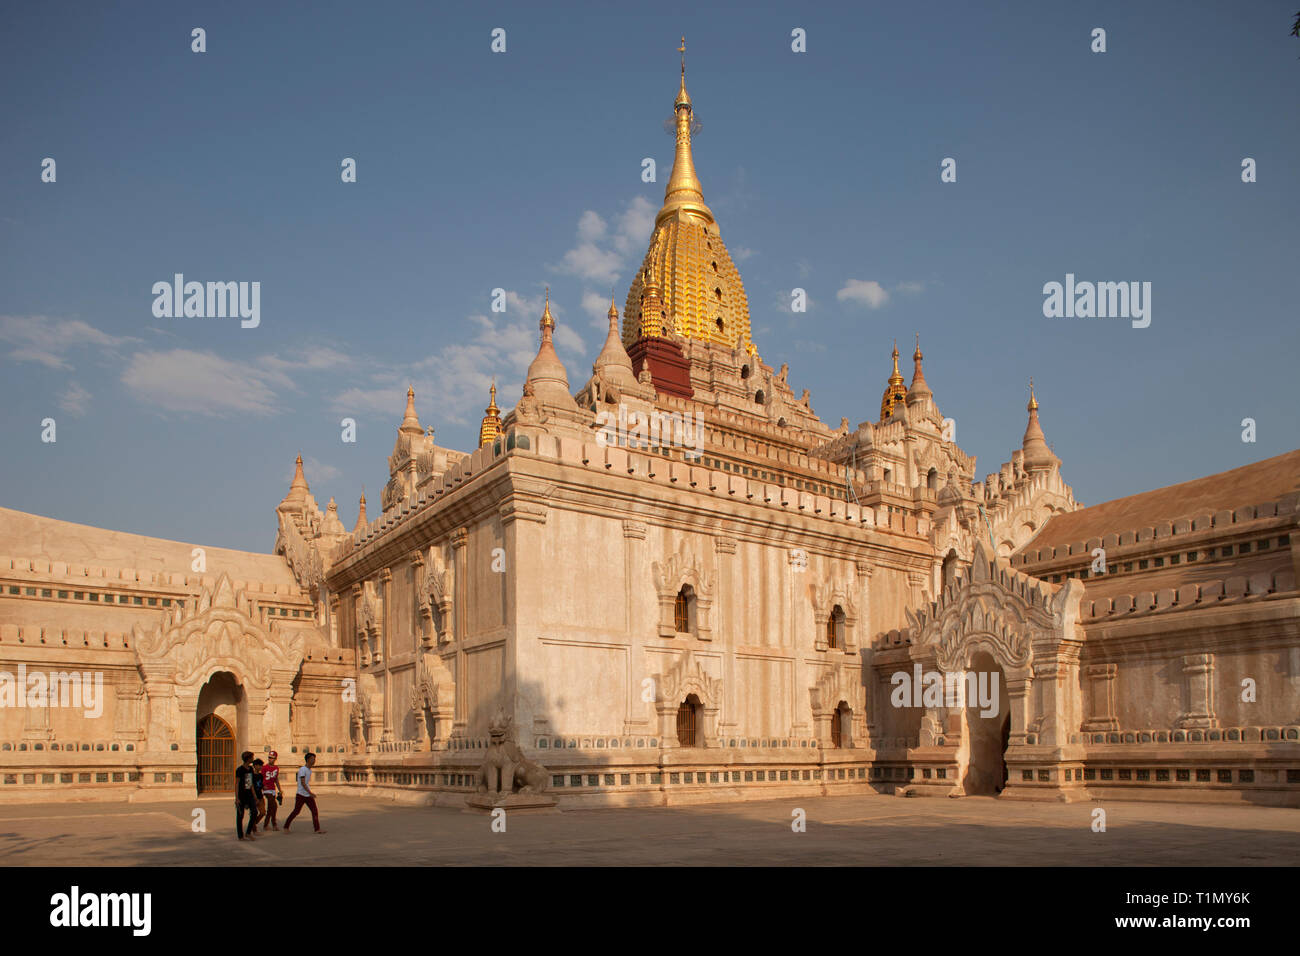 Ananda temple, Old Bagan village area, Mandalay region, Myanmar, Asia Stock Photo